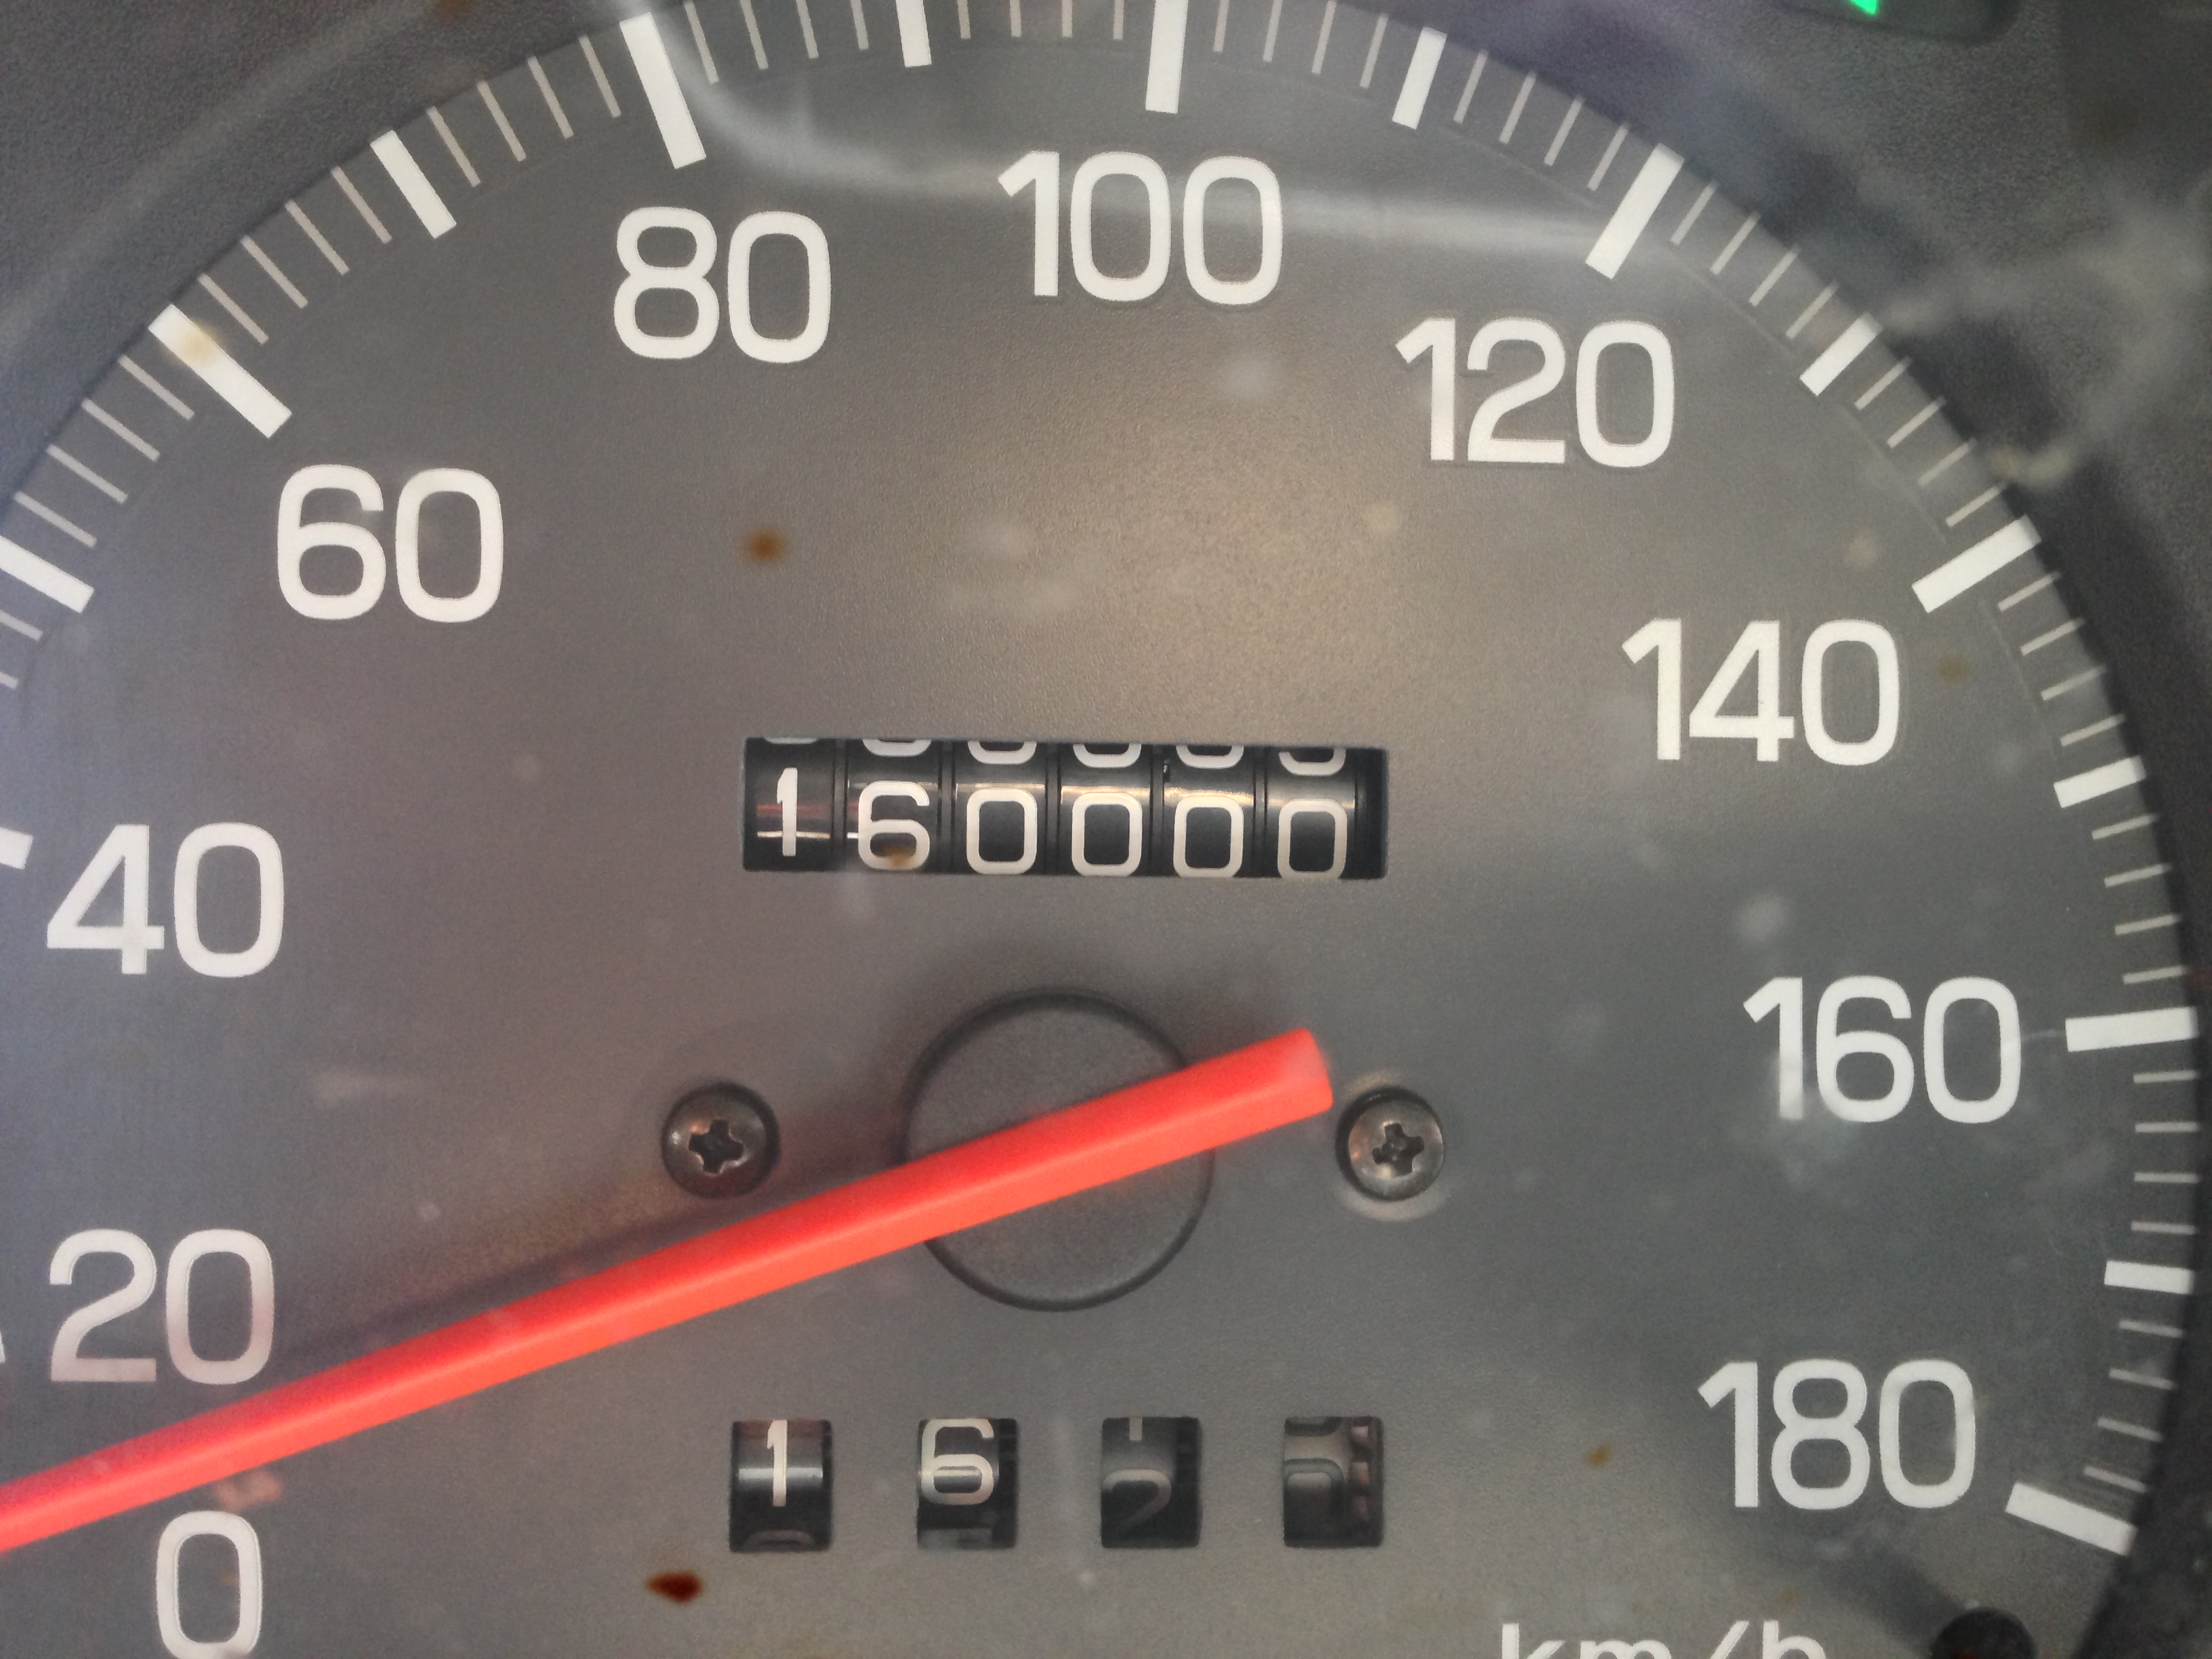 160000km